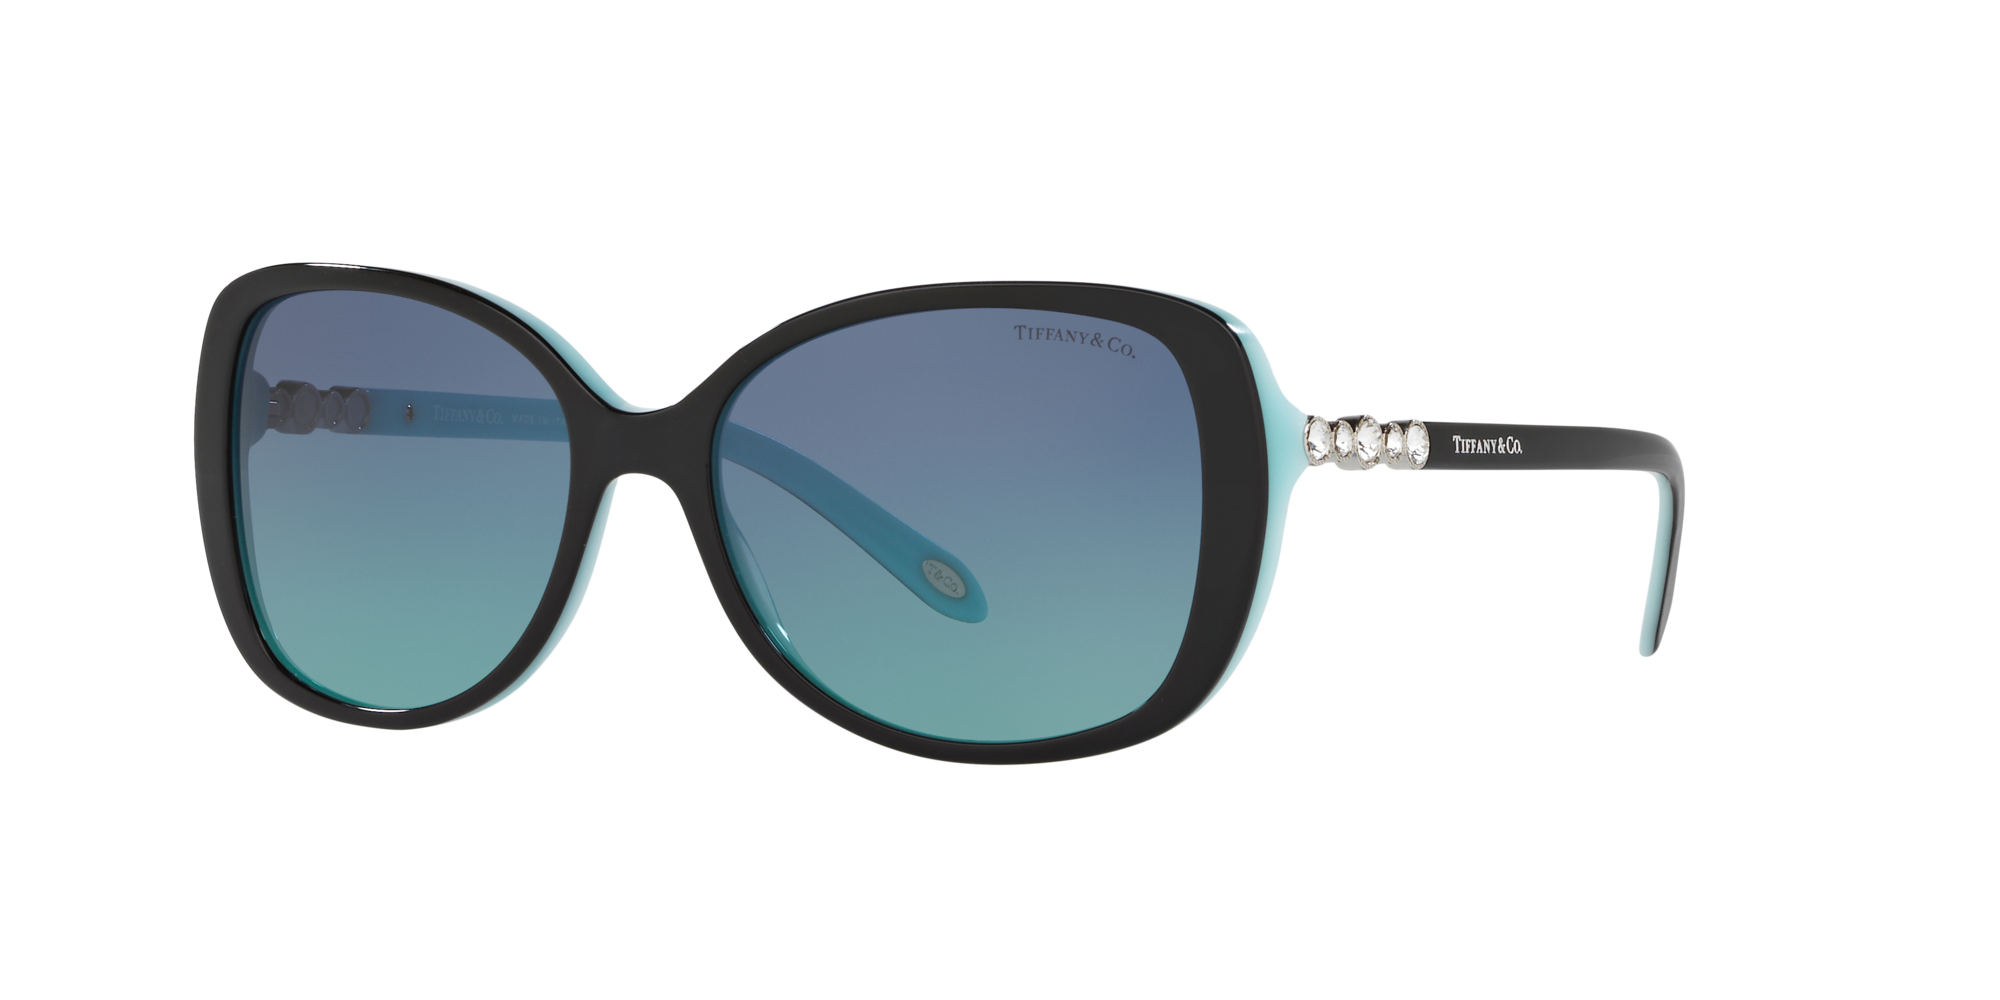 sunglasses tiffany & co